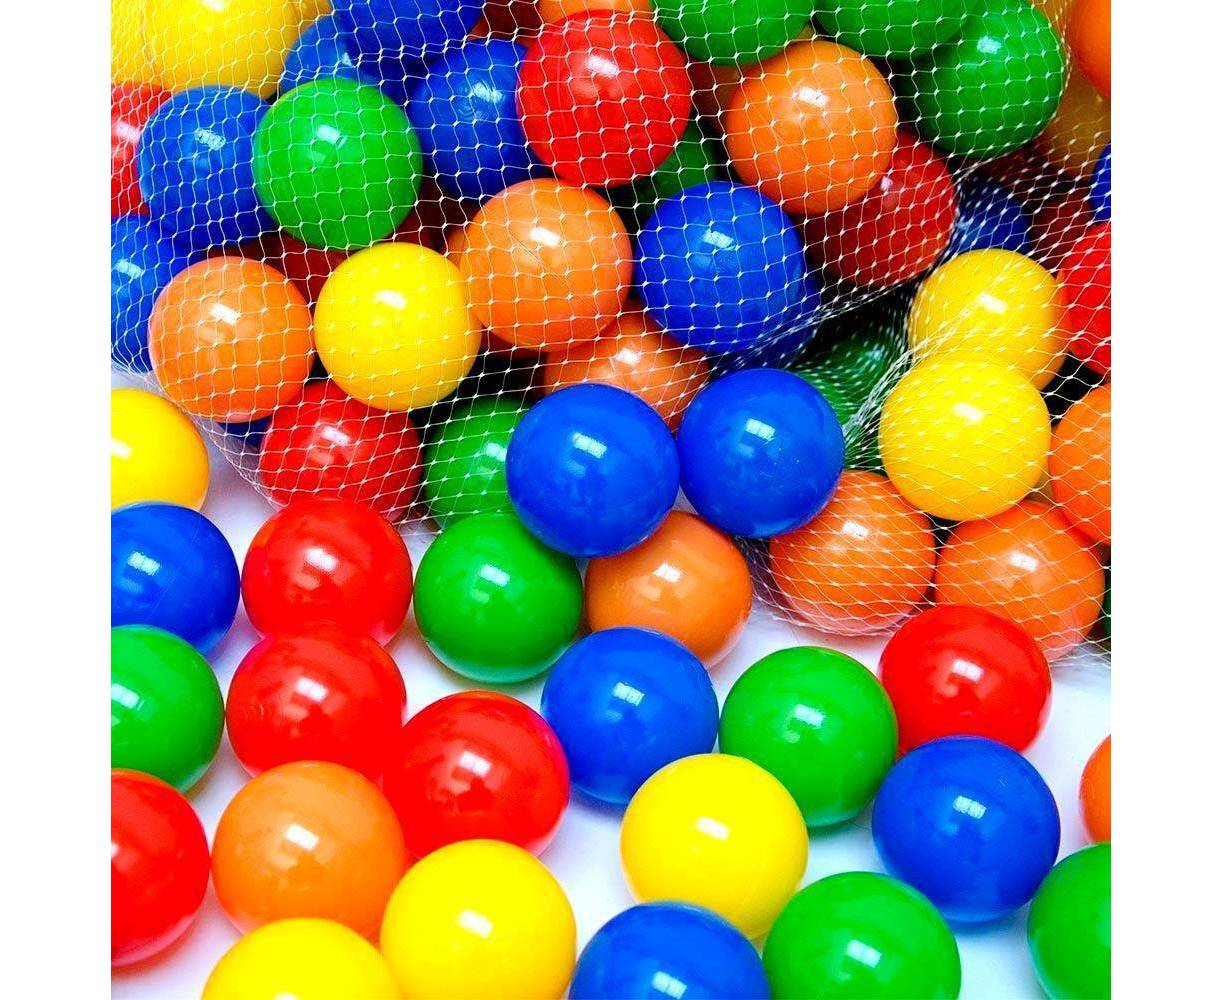 colorful balls